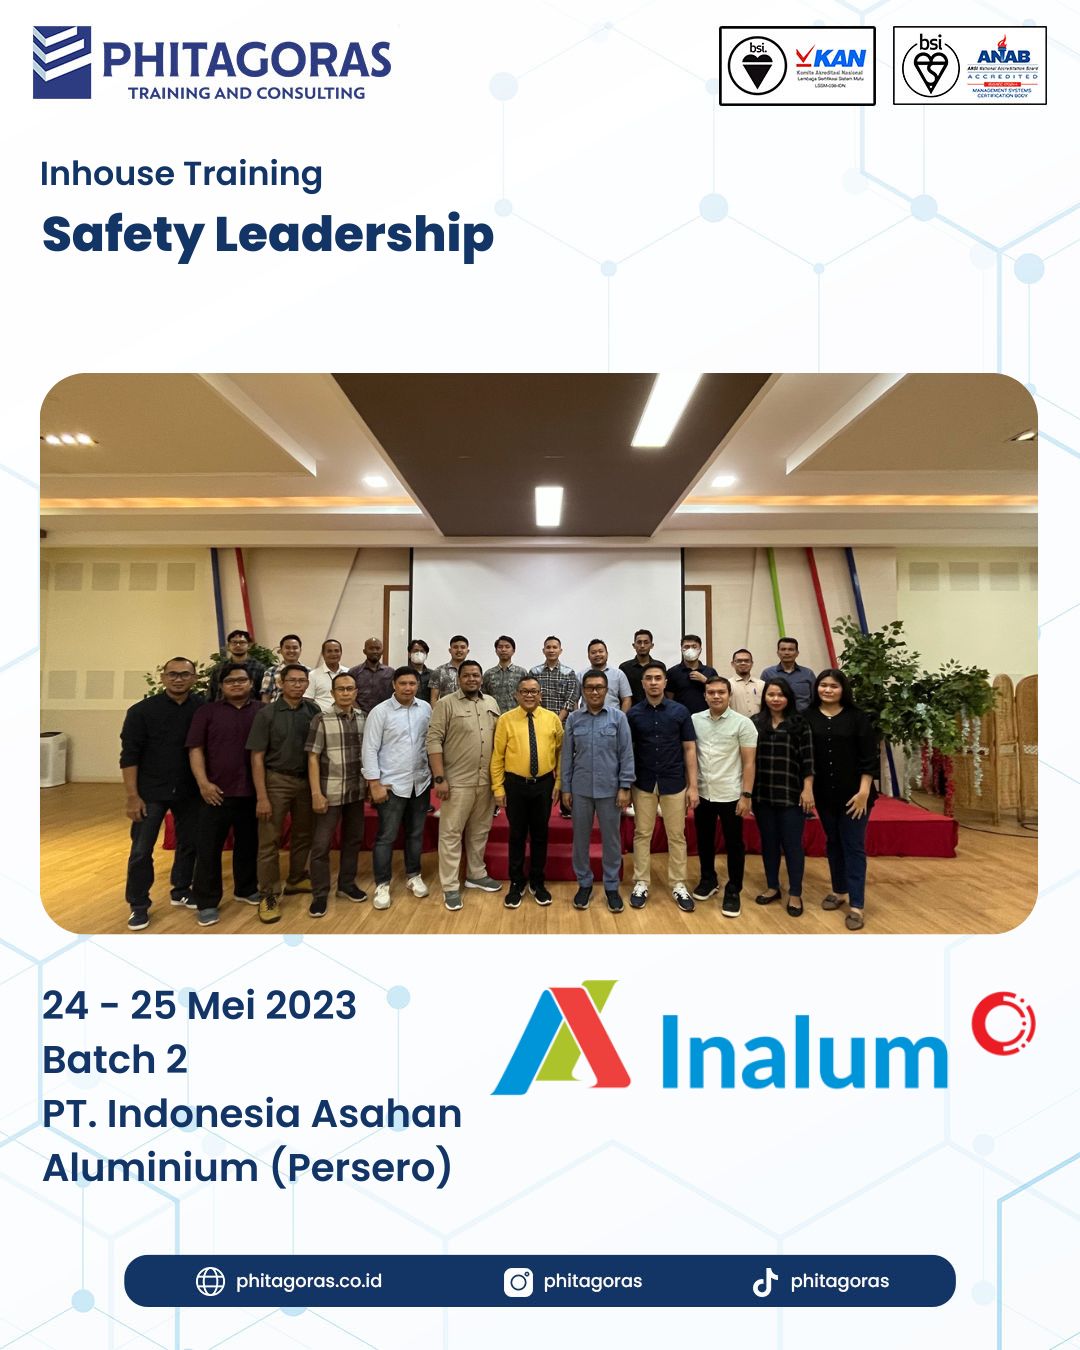 Inhouse Training Safety Leadership - PT. Indonesia Asahan Aluminium (Persero) Medan , Batch 2